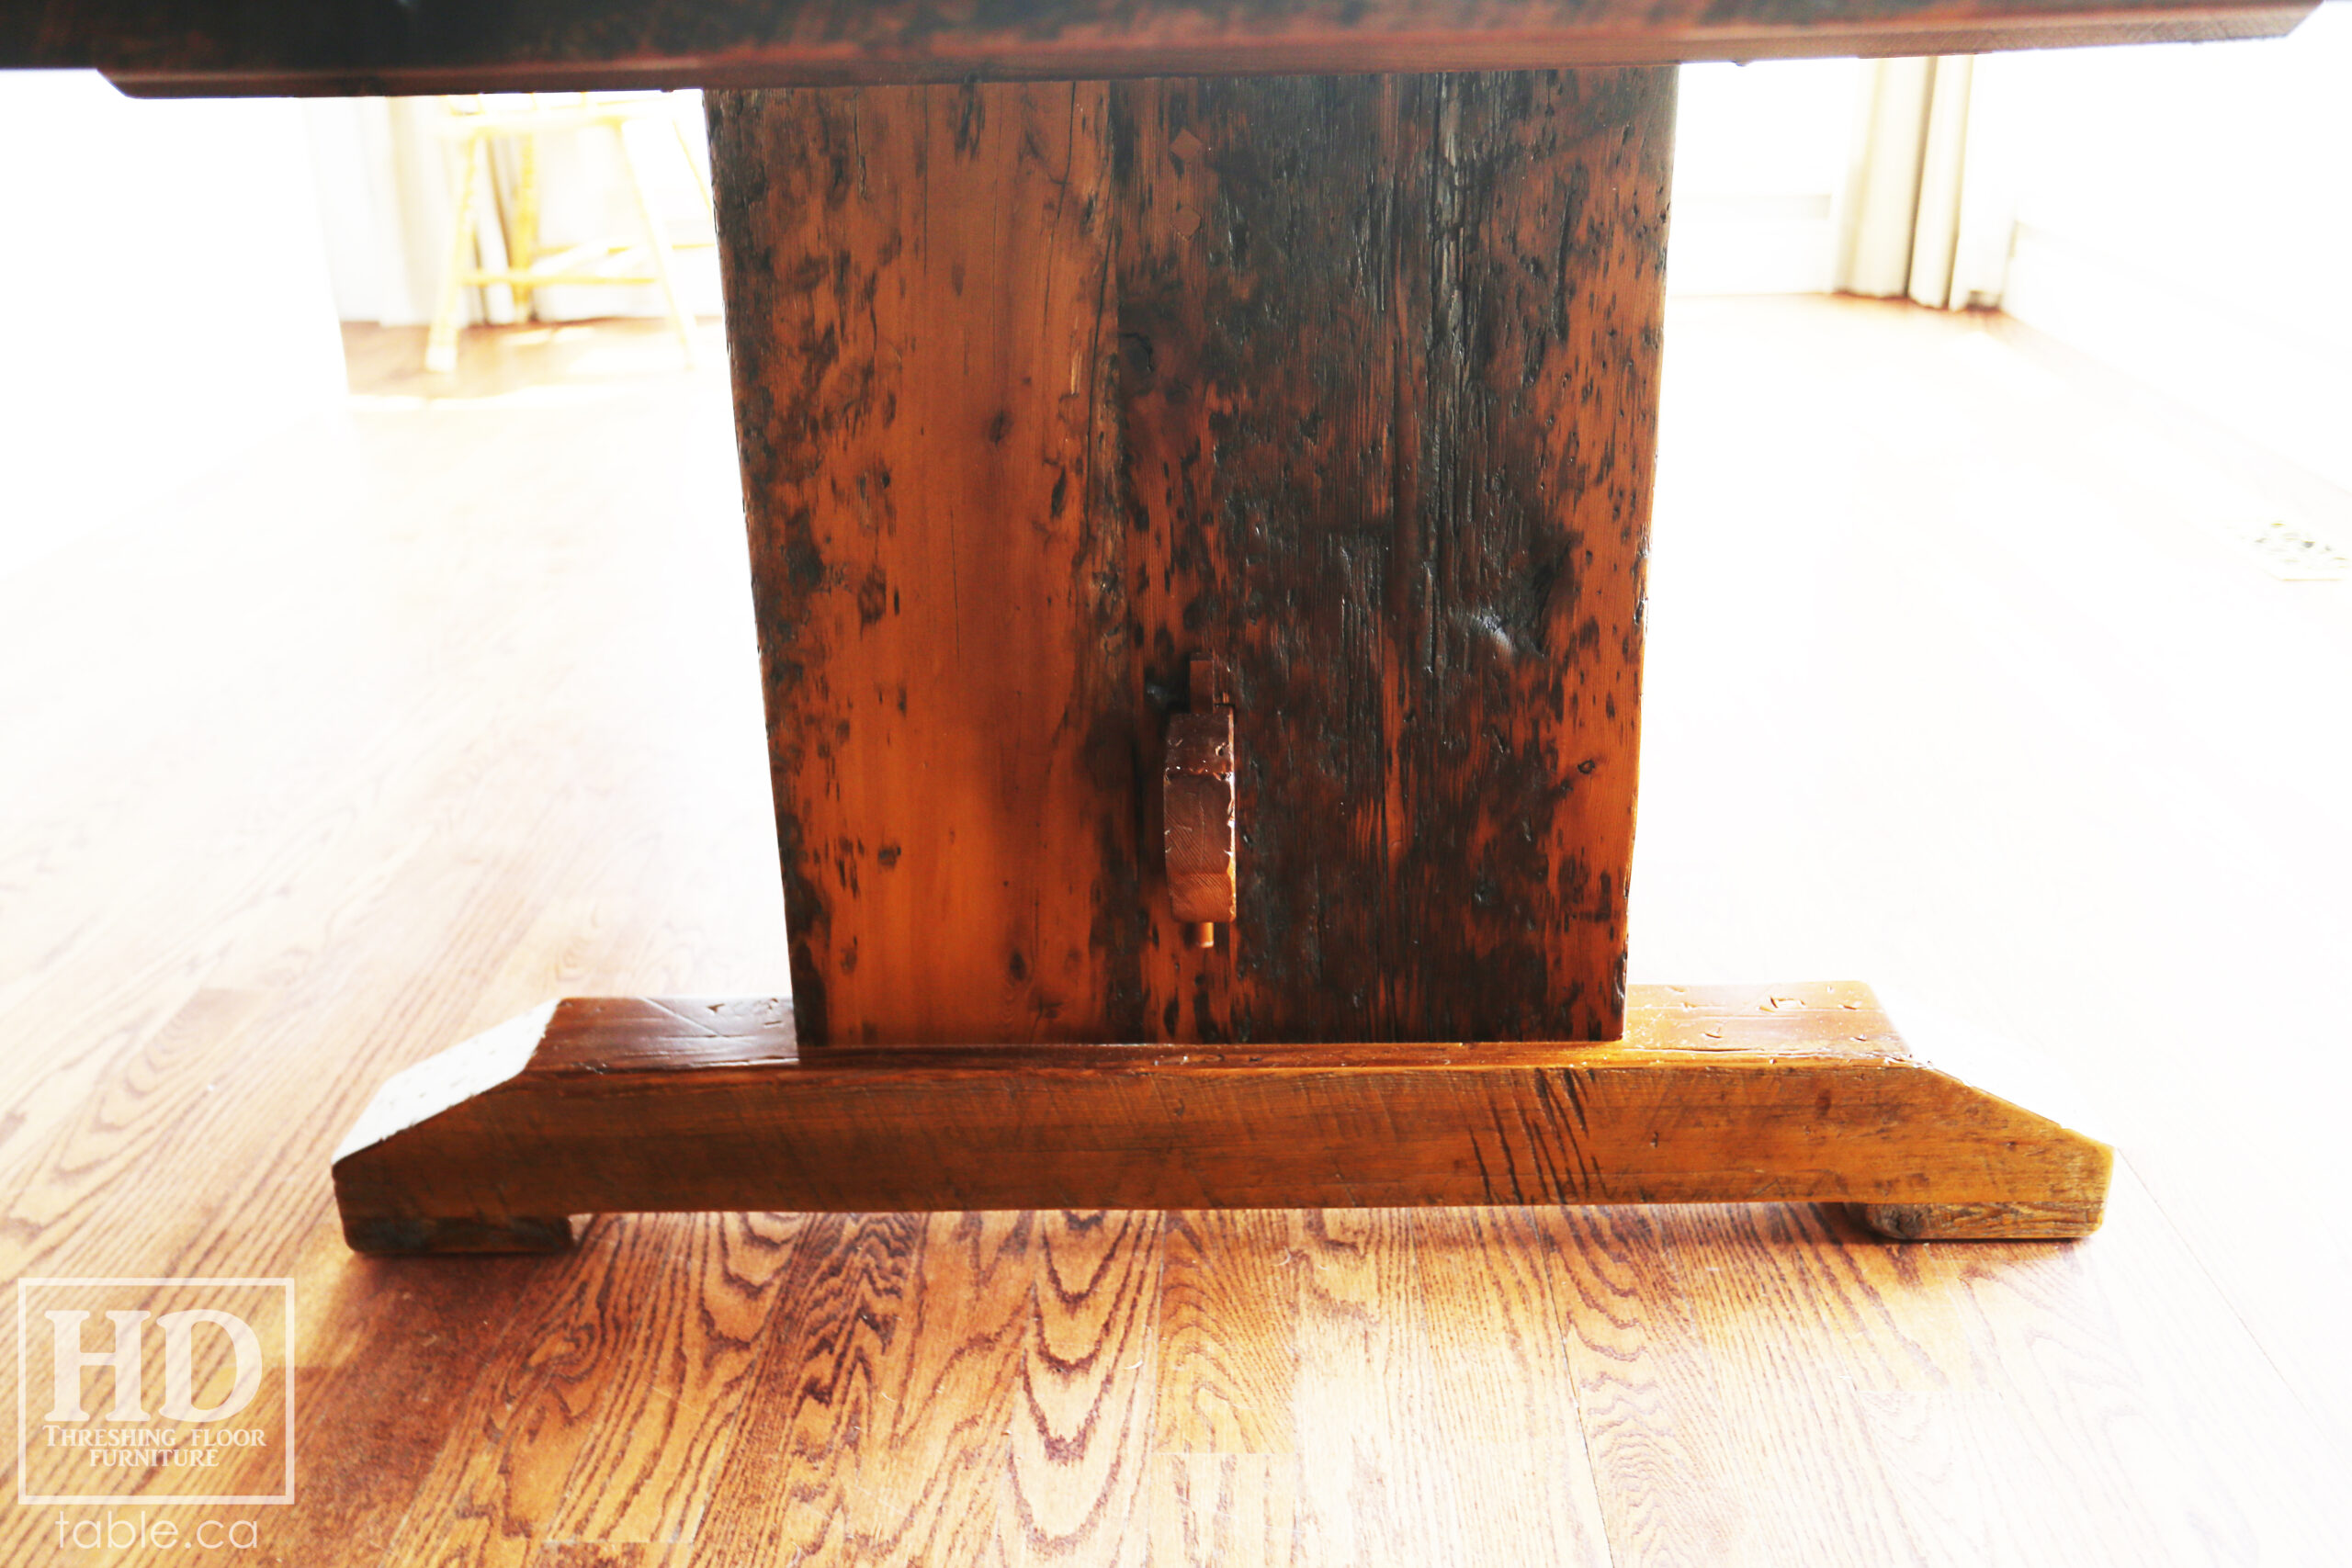 10' Reclaimed Wood Trestle Table we made for a Cambridge, Ontario home - 48" wide - Hemlock Ontario Barnwood Threshing Floor 2" Construction - Original edges & distressing maintained - Premium epoxy + satin polyurethane finish - www.table.ca